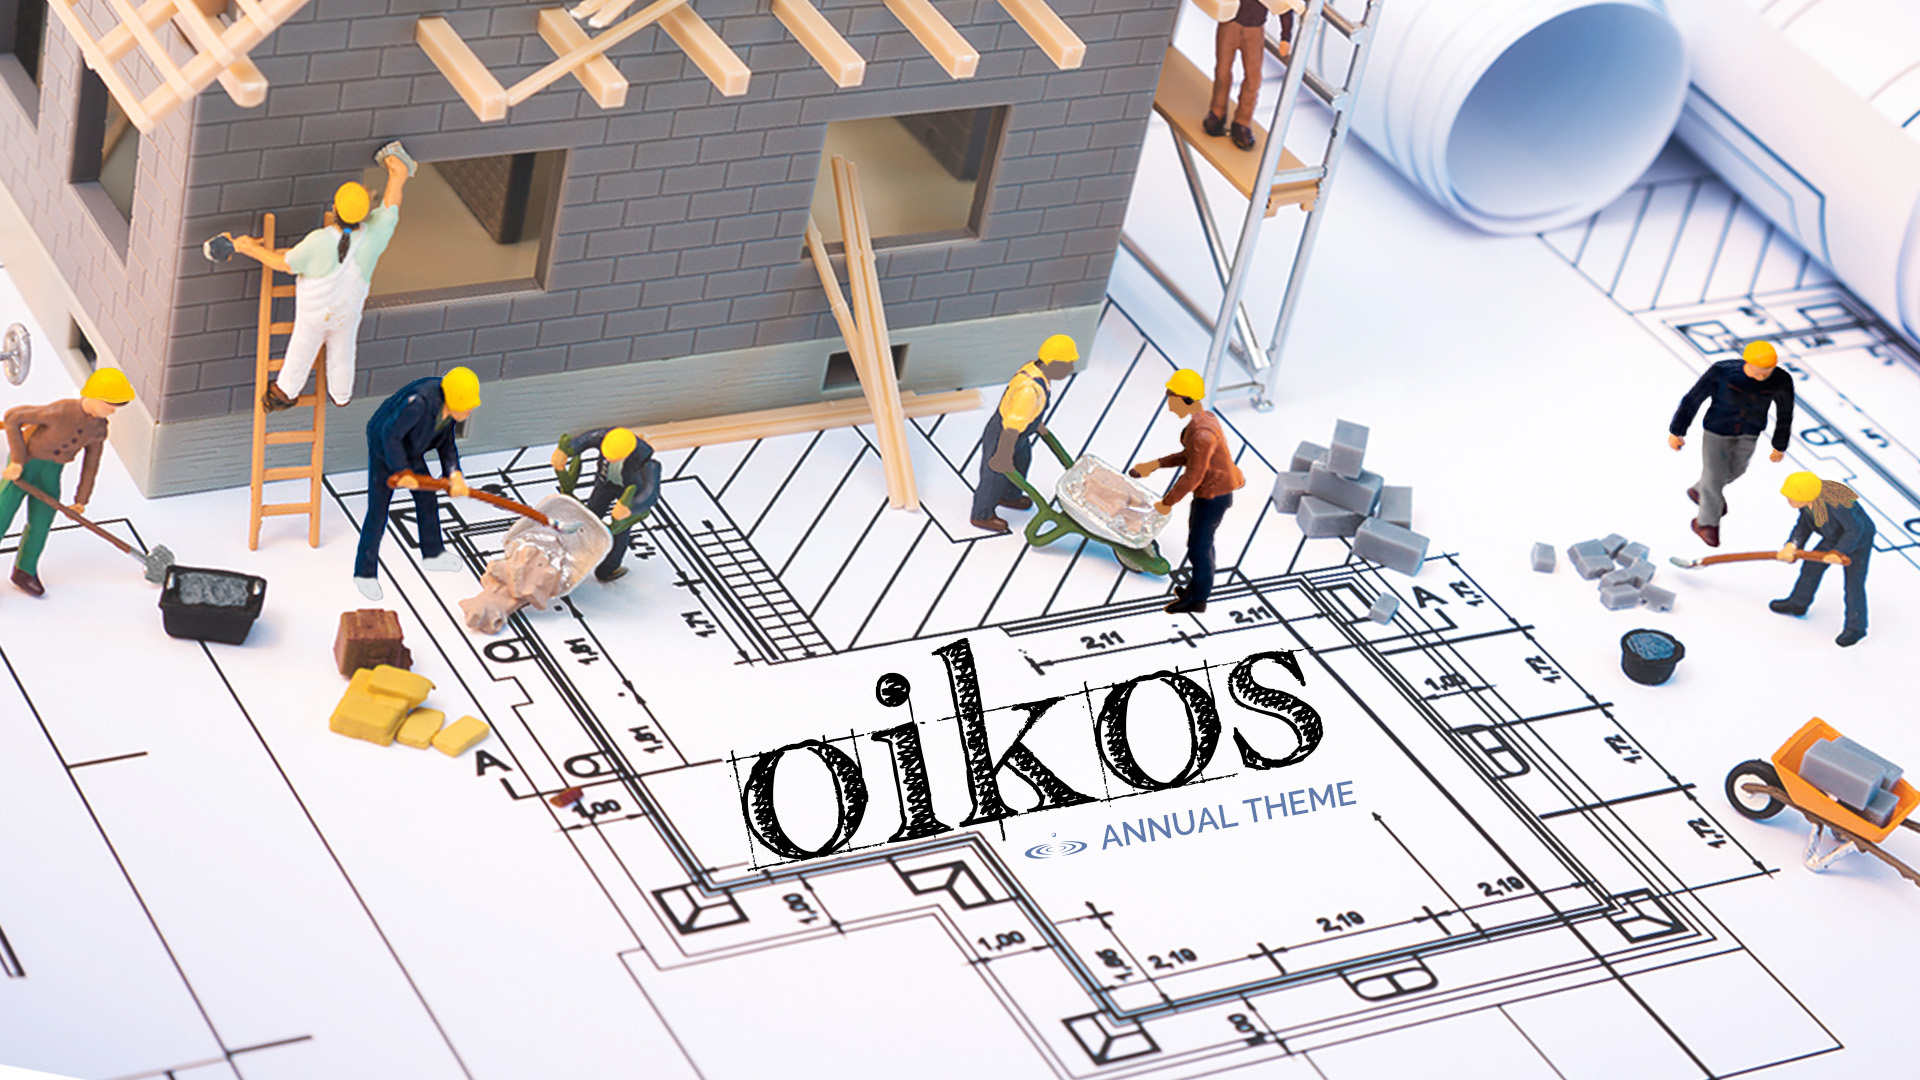 Oikos: Building